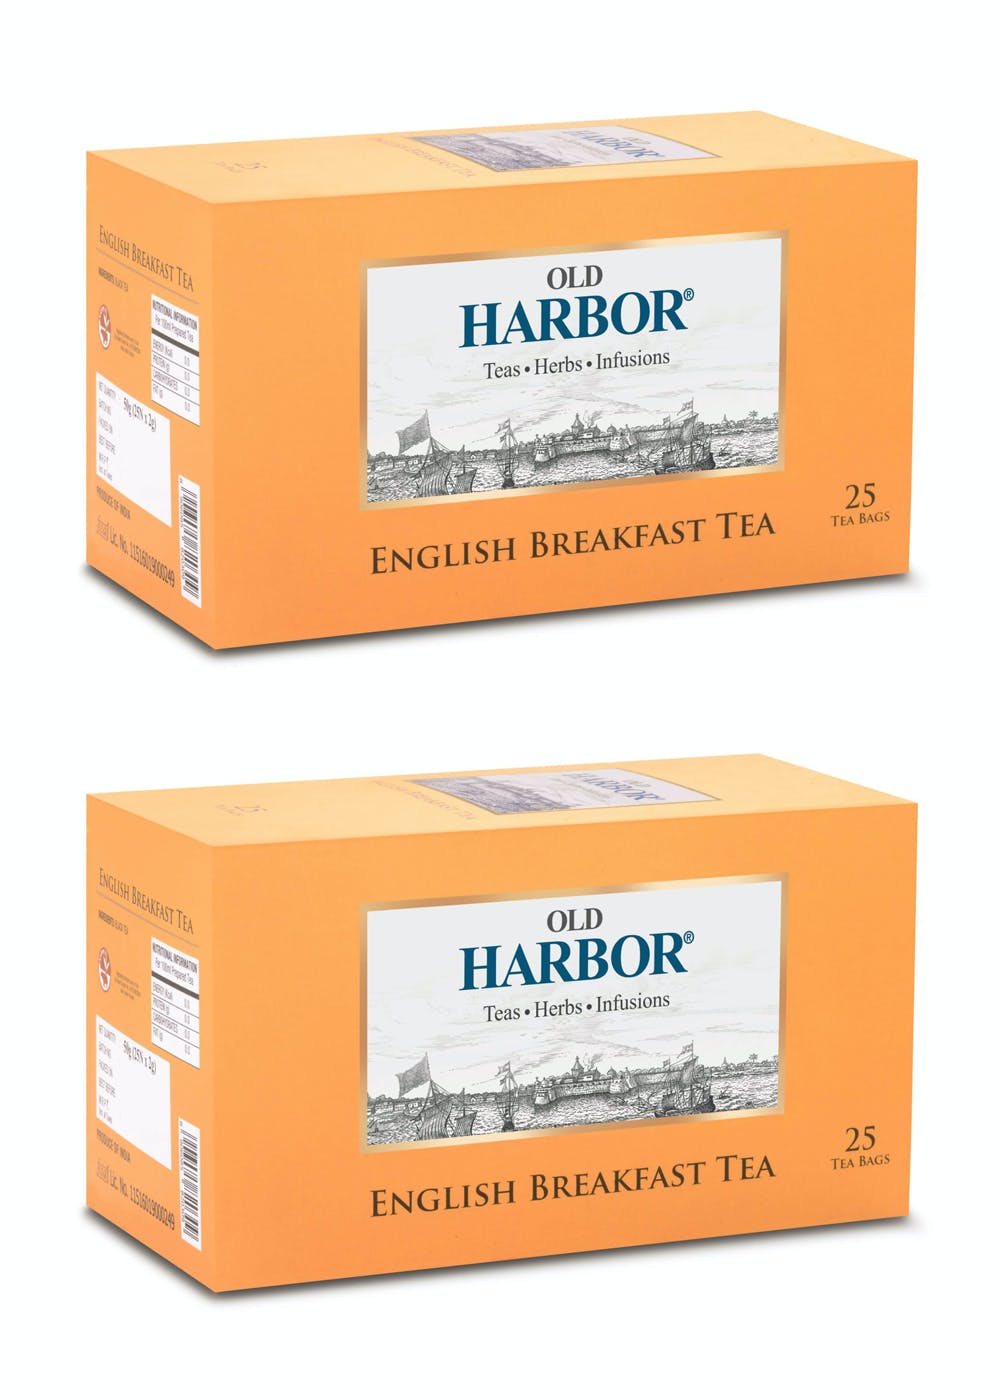 English Breakfast Tea Bags Combo - Set of 2 (25 Tea Bags)